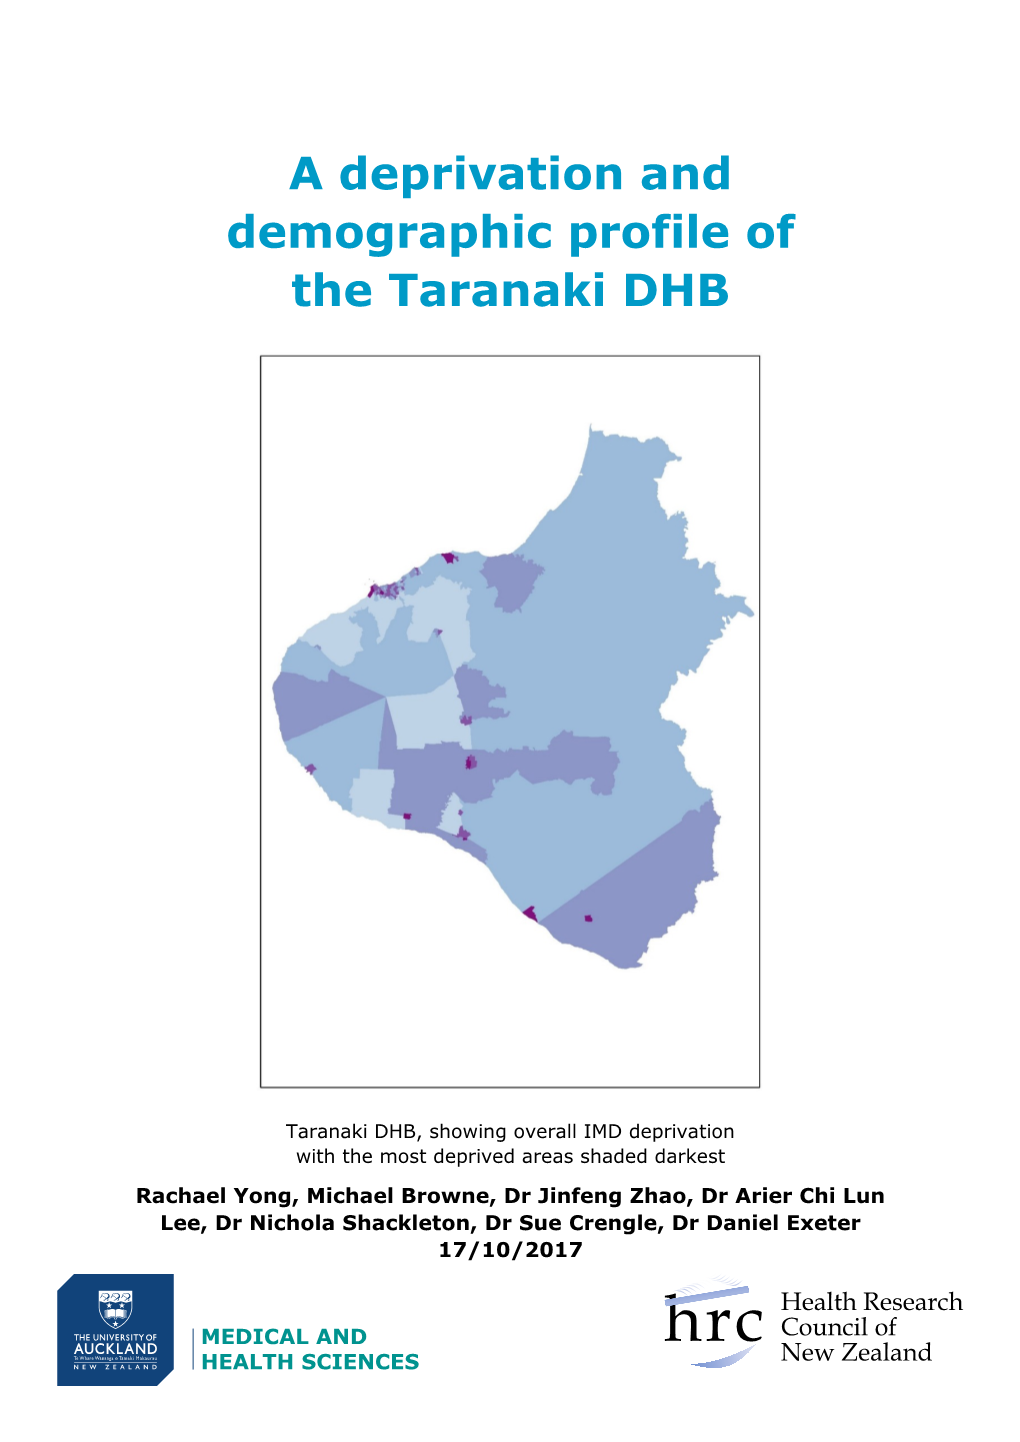 A Deprivation and Demographic Profile of the Taranaki DHB